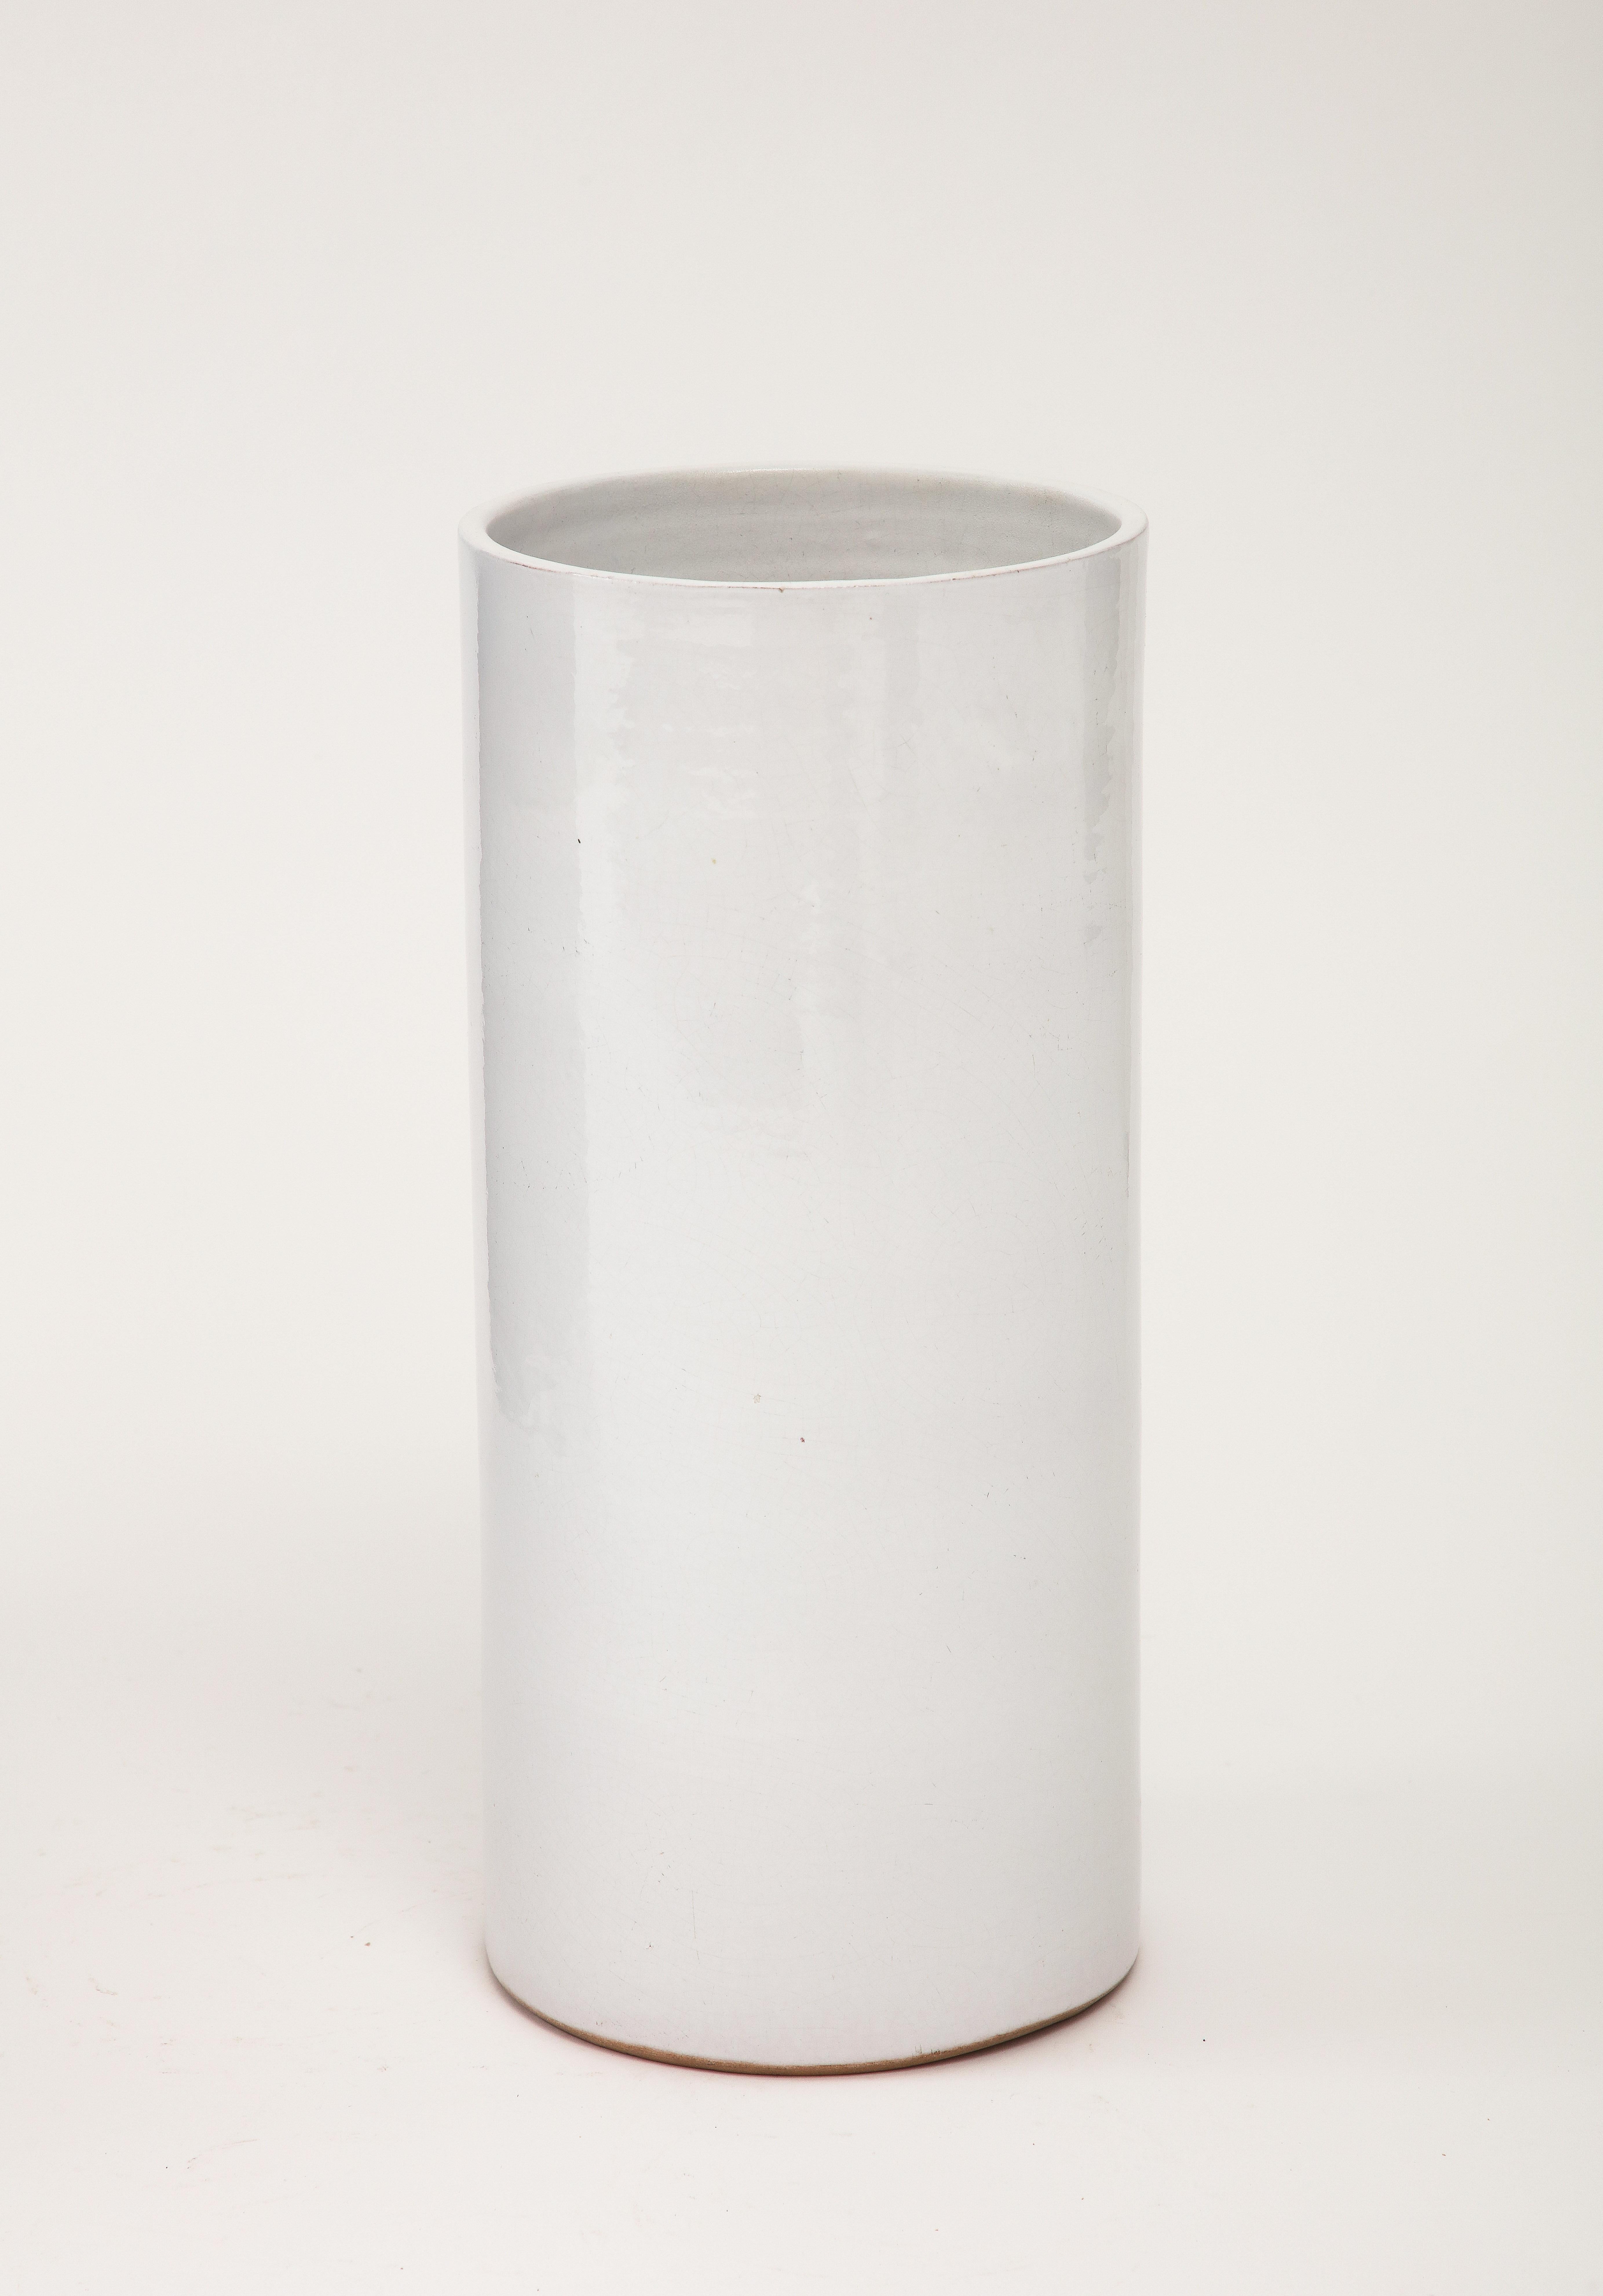 French Grey White Crackle Glaze Cylindrical Vase, France, c. 1950's For Sale